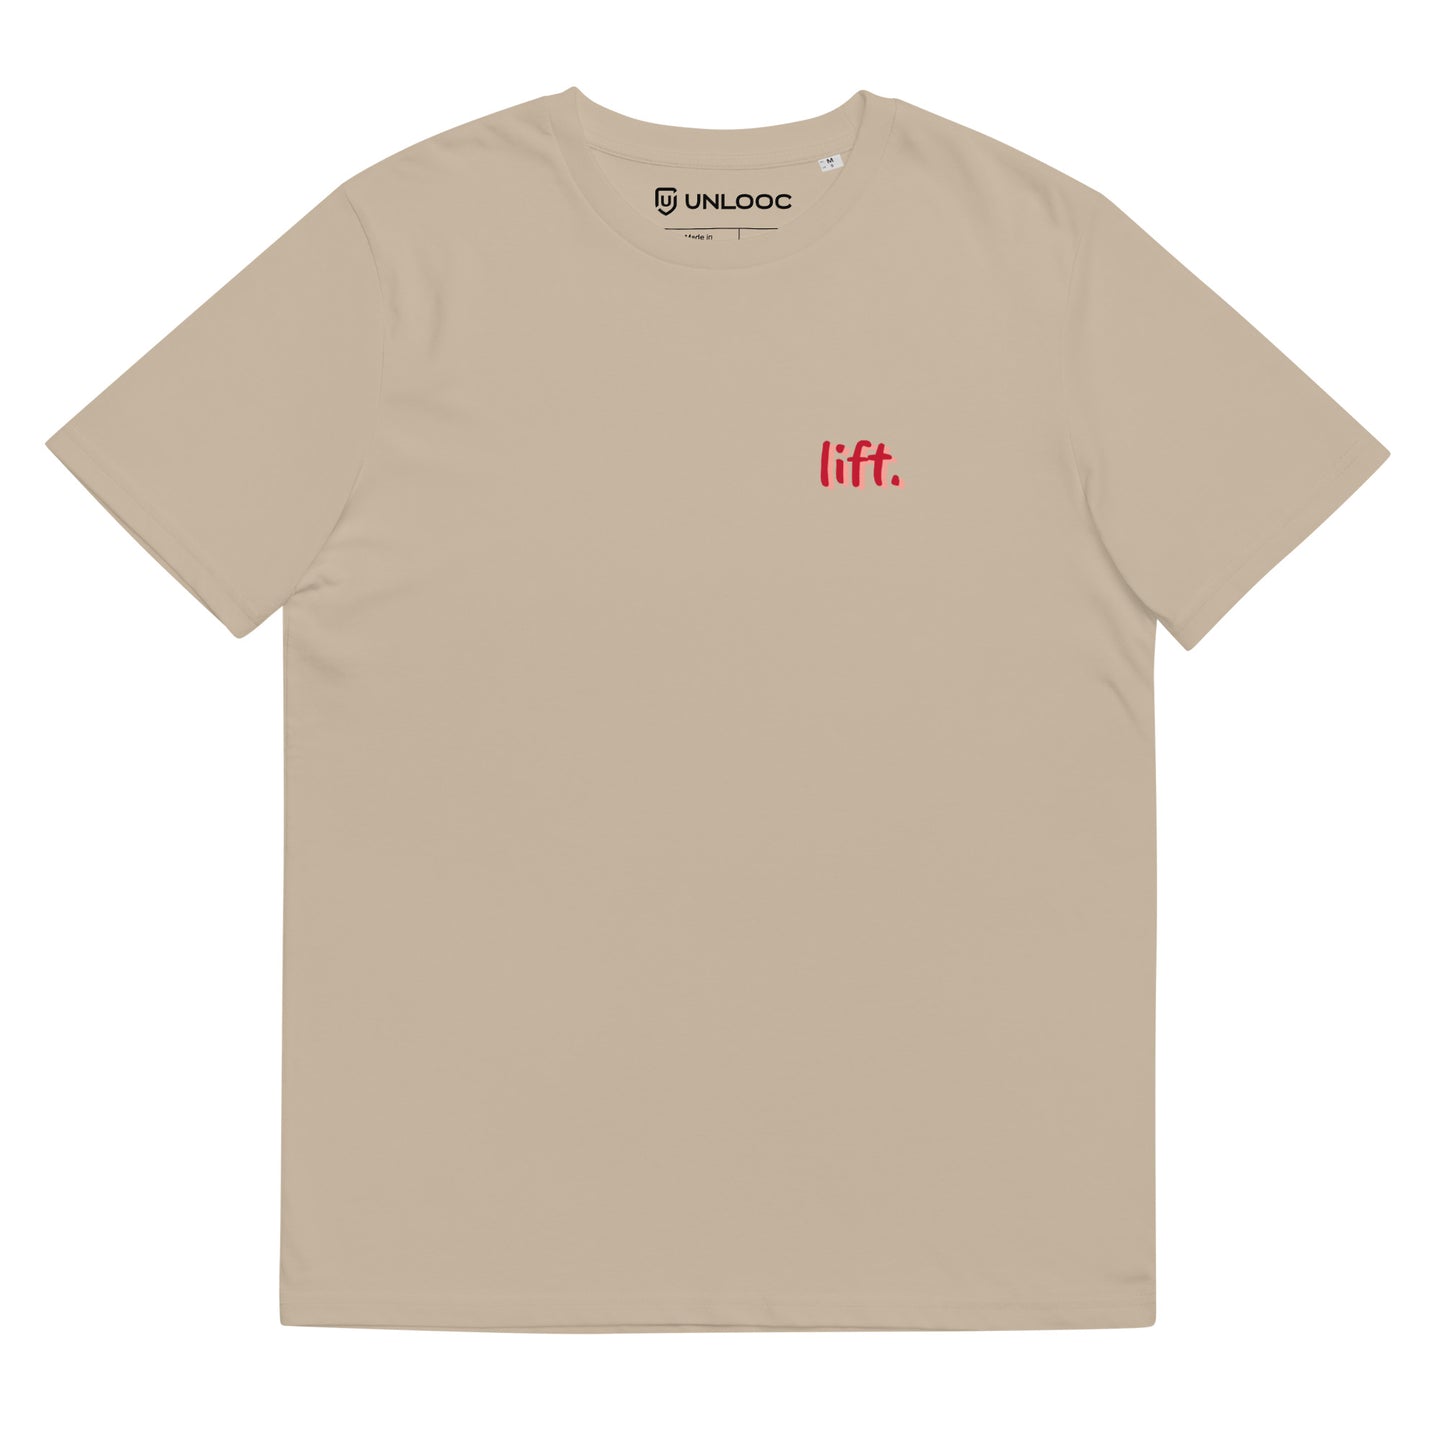 Lift. unlock PR shirt